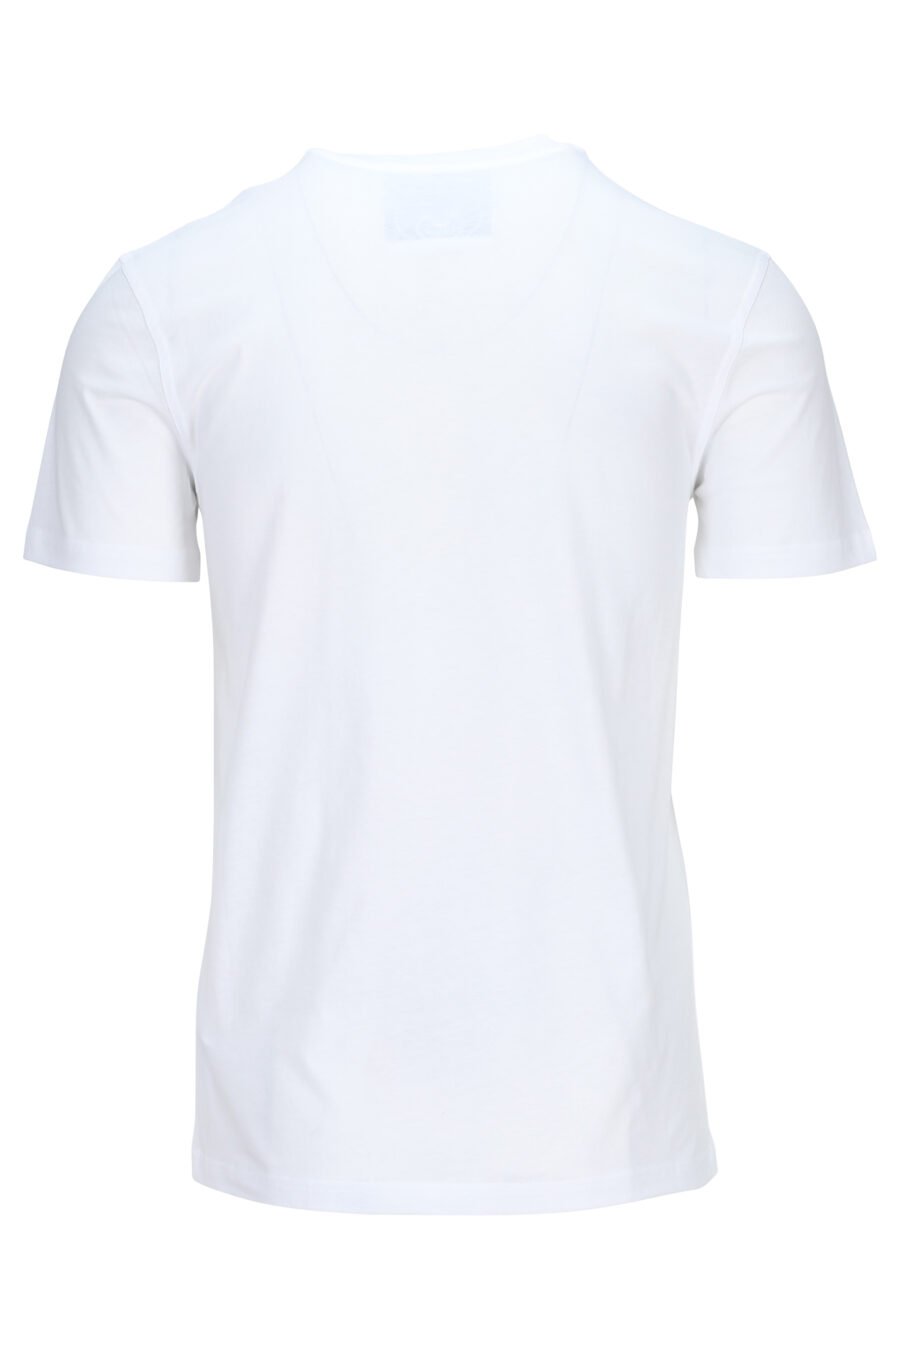 Camiseta blanca con algodón eco con minilogo negro "teddy" - 889316853131 1